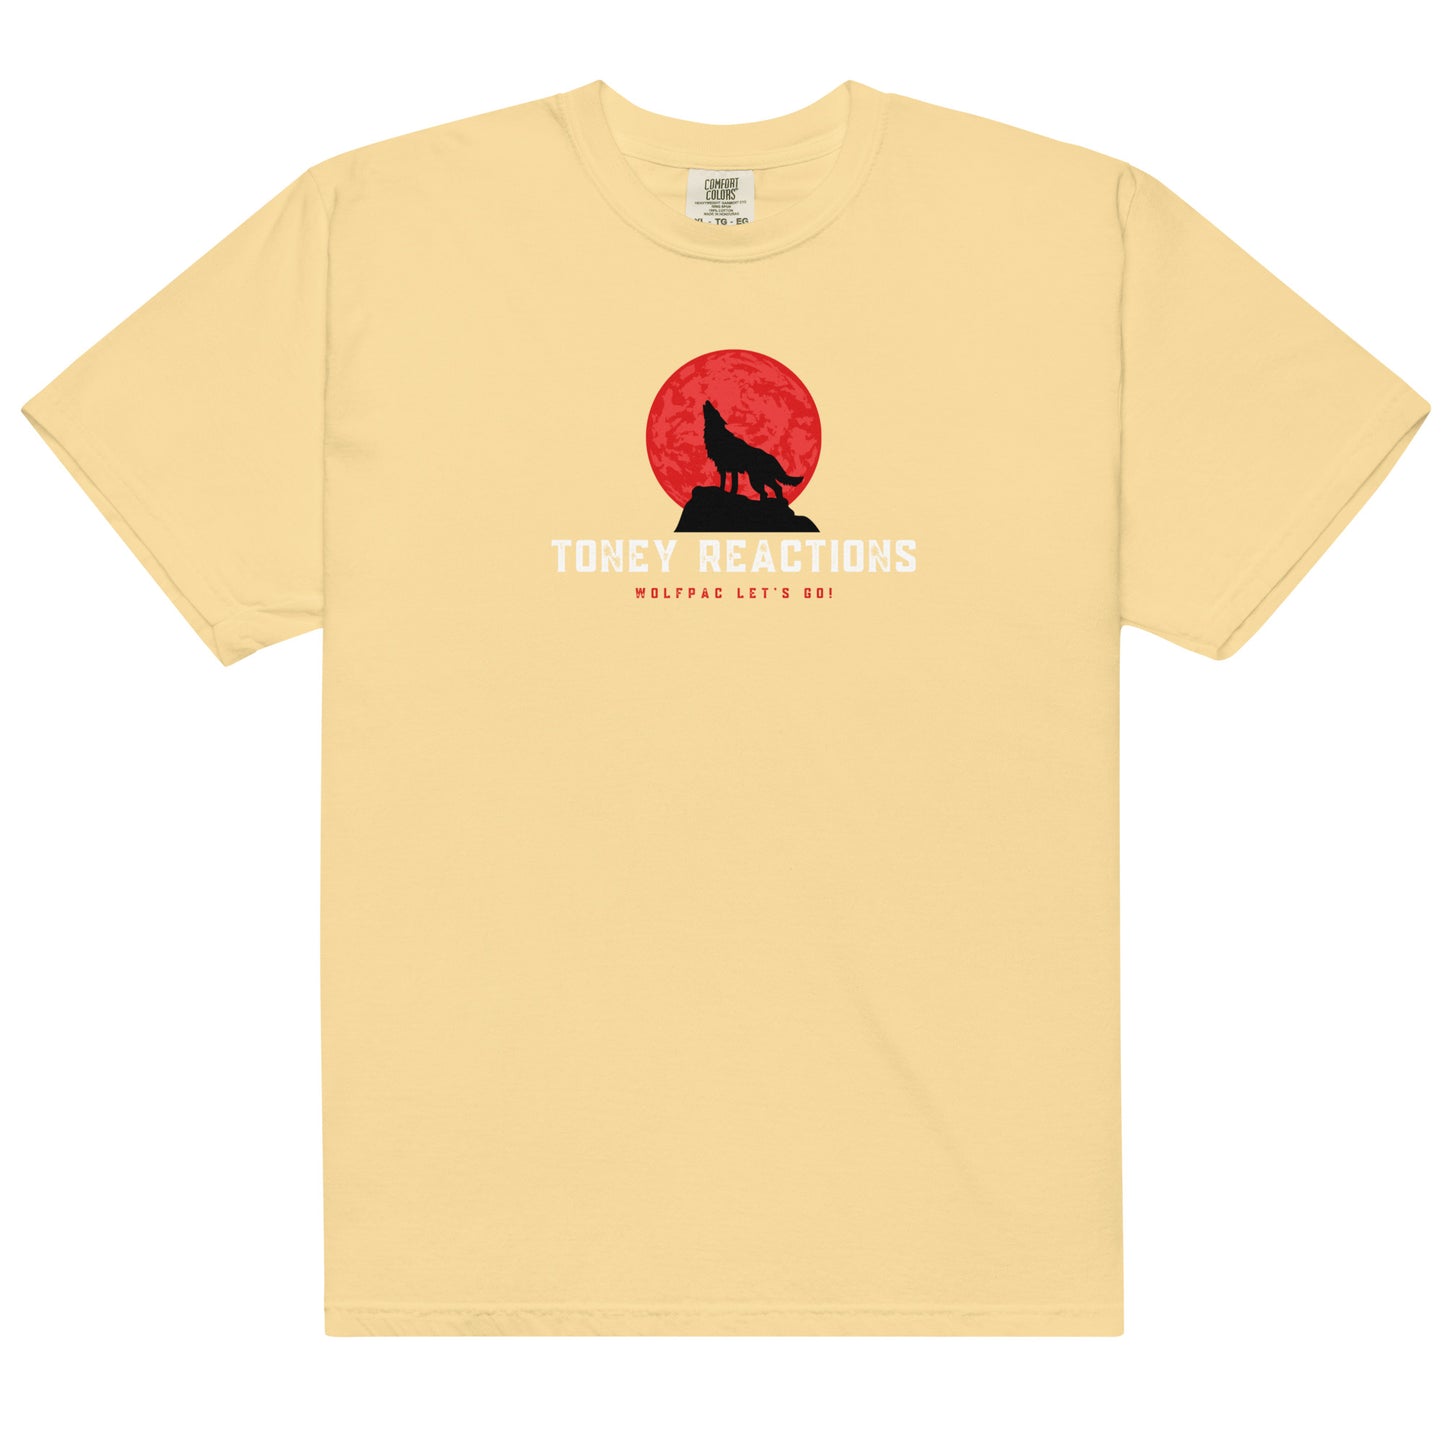 Men’s WOLFPAC t-shirt